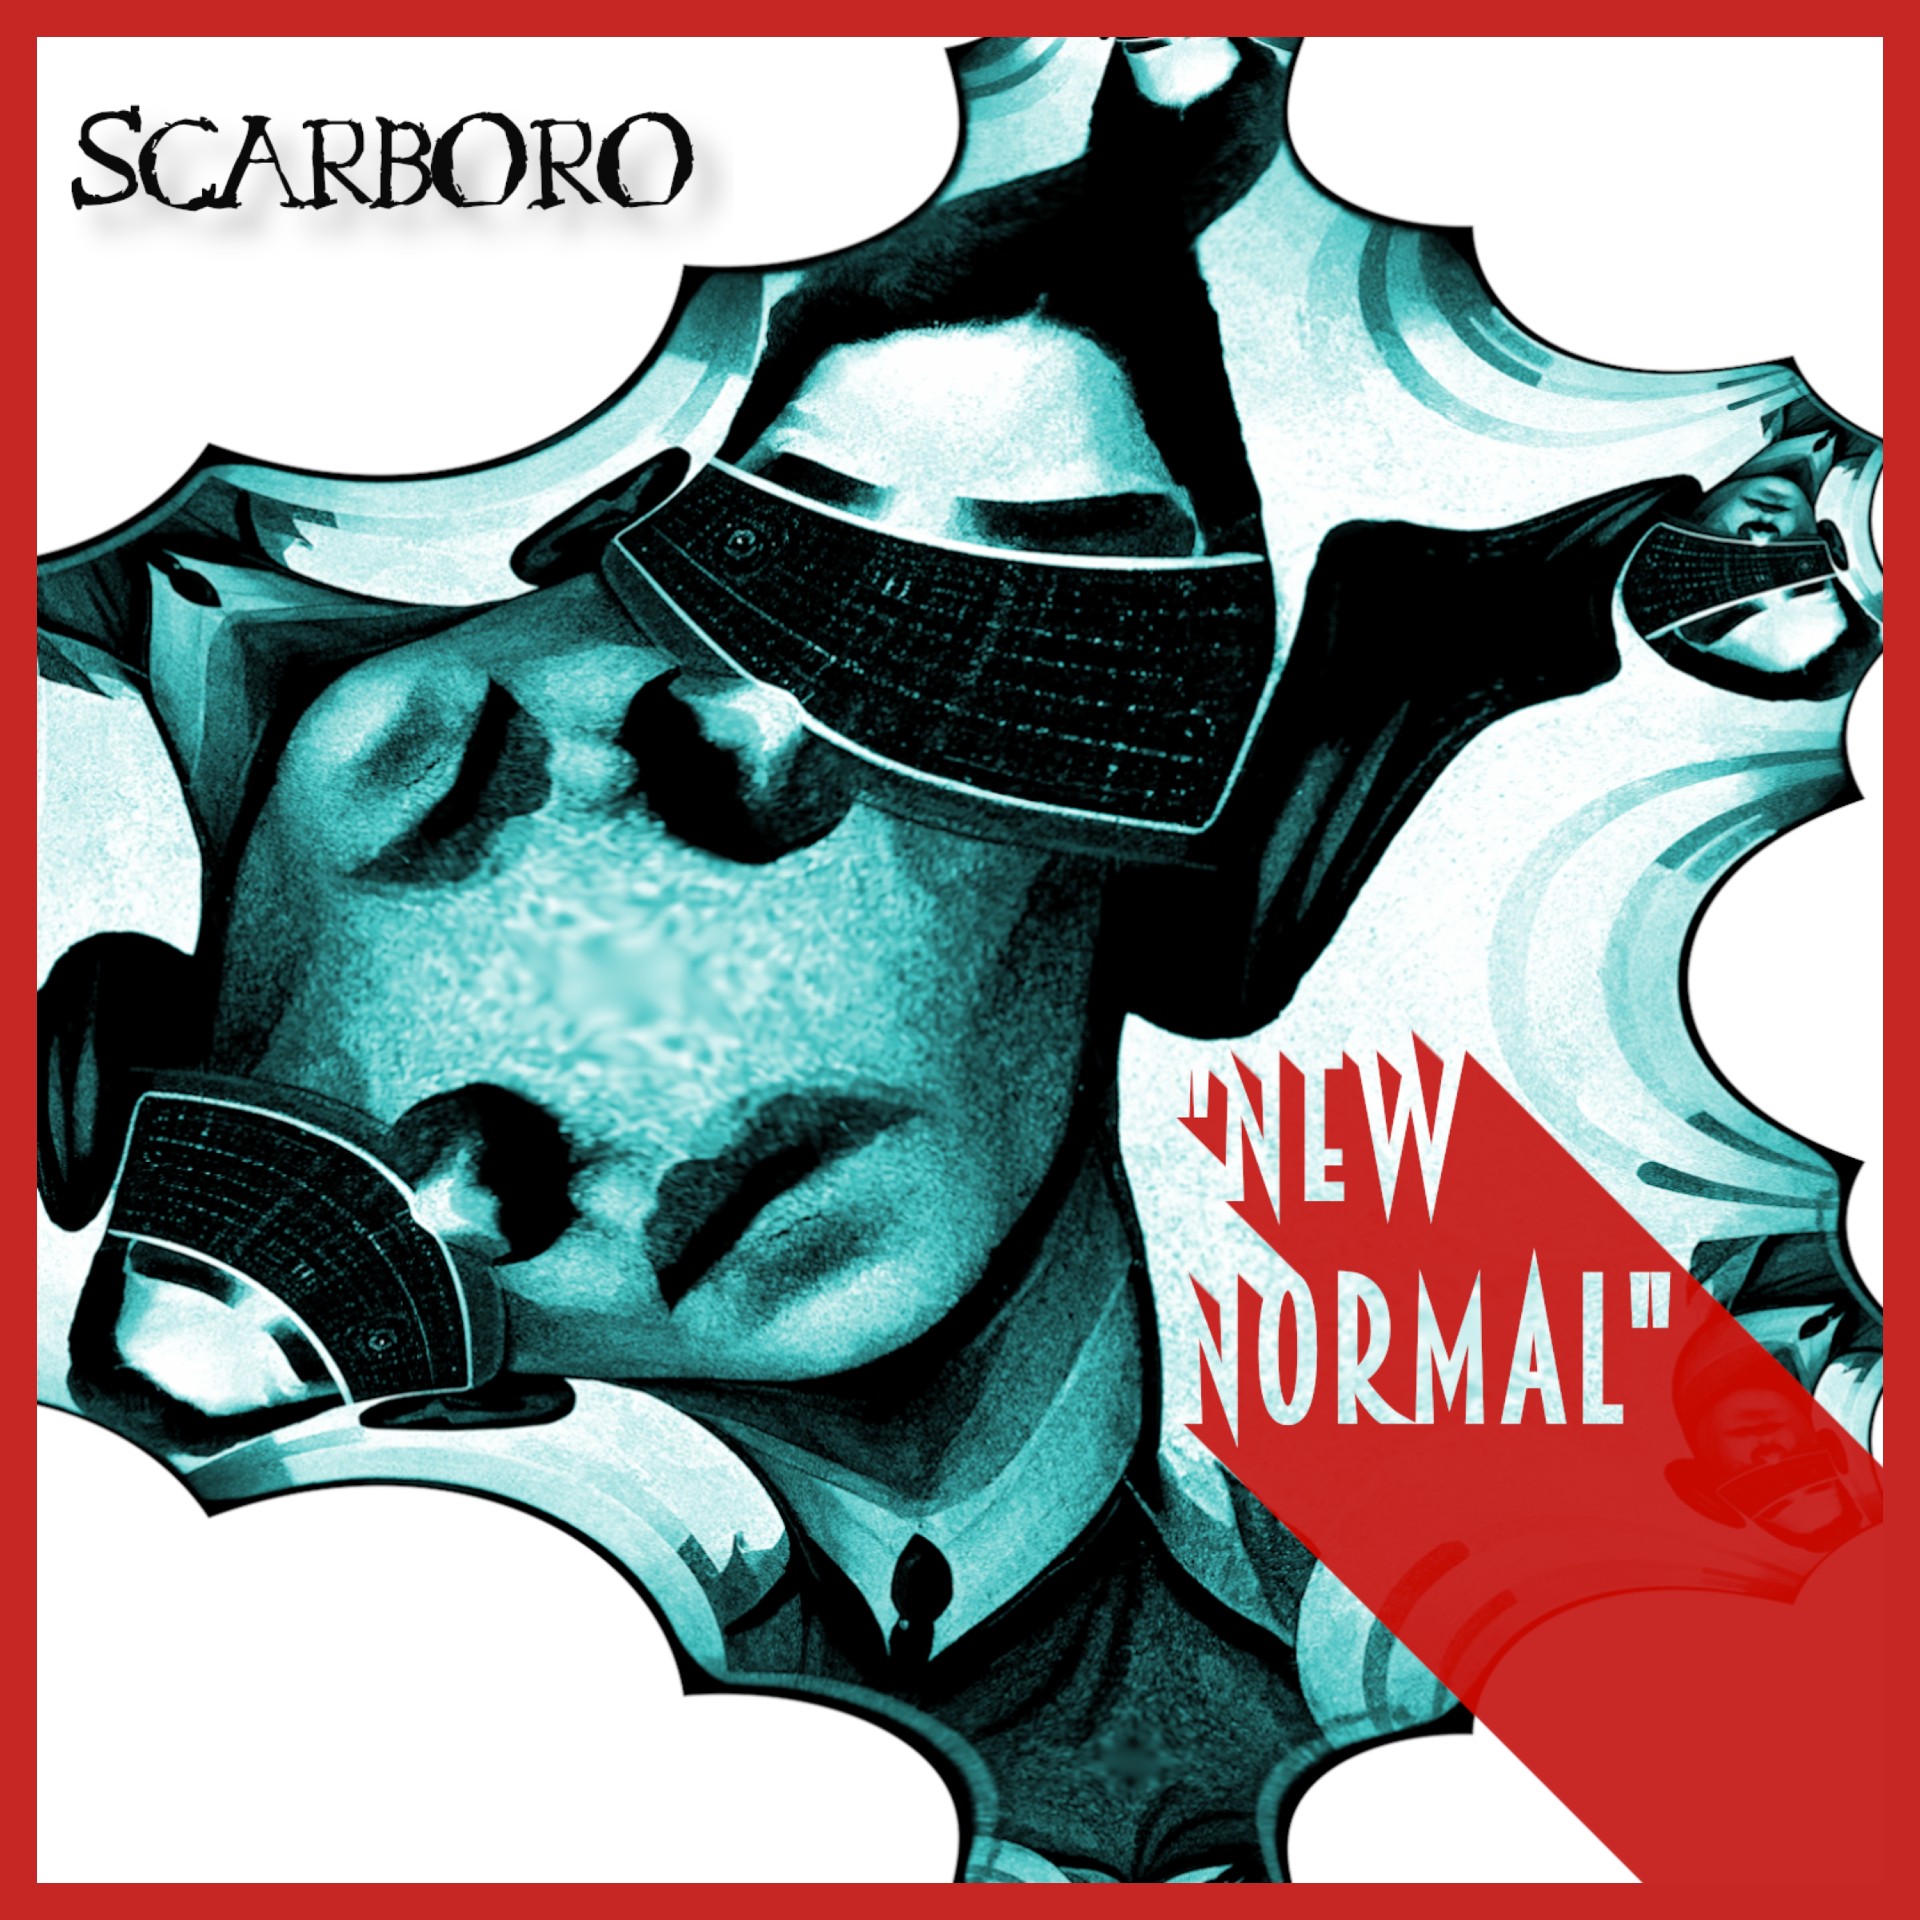 Scarboro “New Normal” single artwork